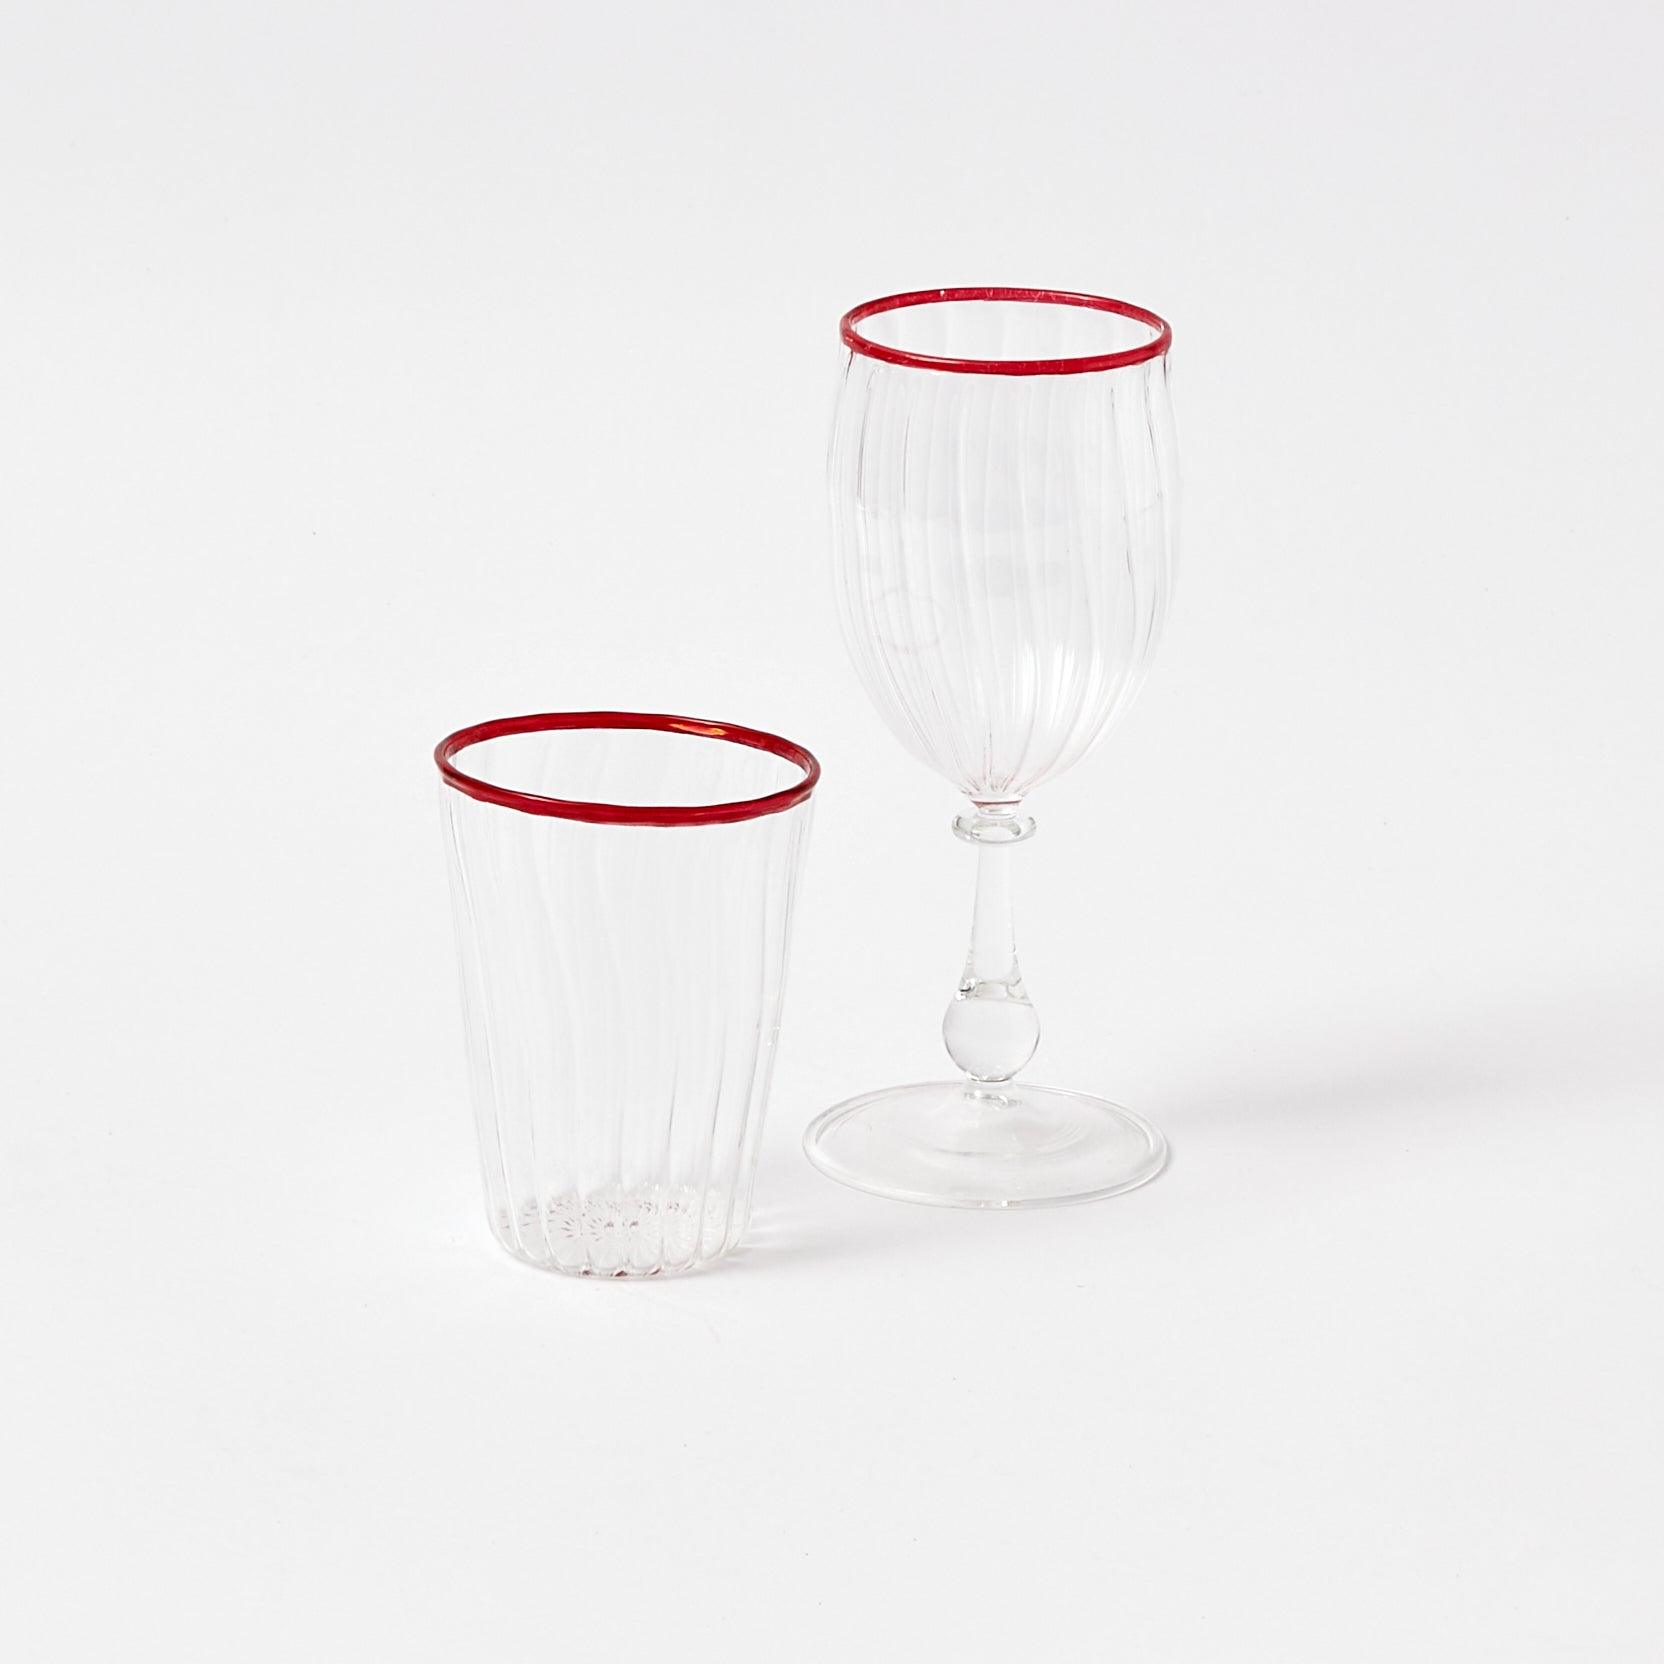 Monogrammed Acrylic Stemless Wine Glasses - Set of 4